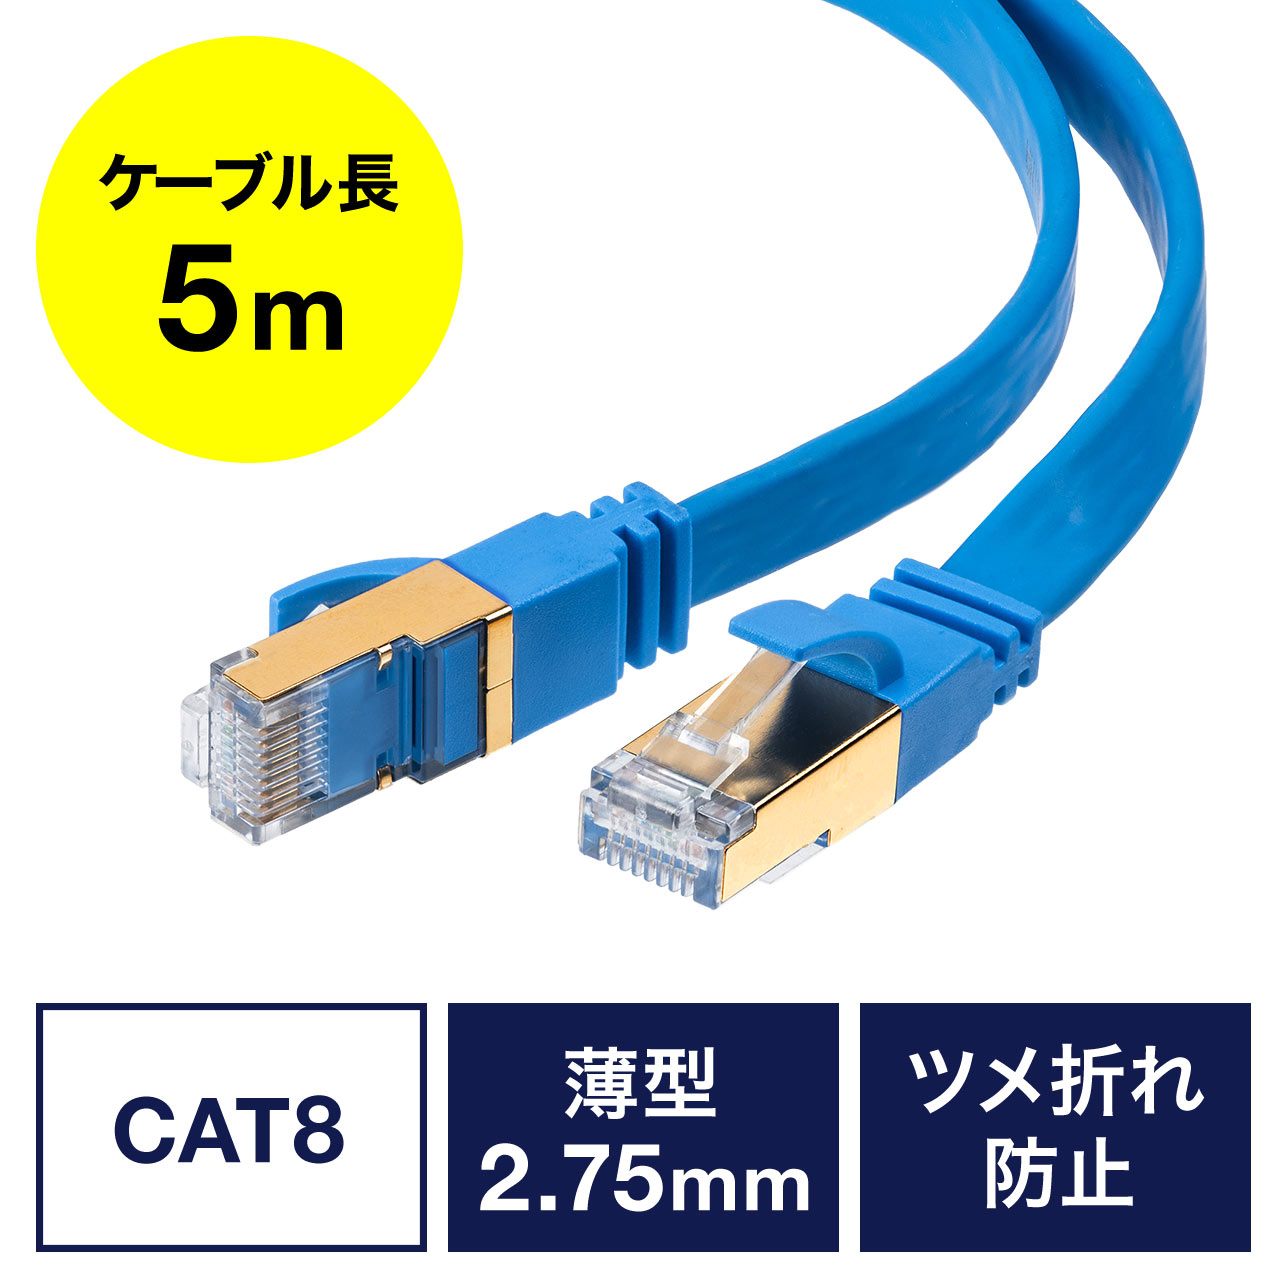 5m LANケーブル CAT8 カテゴリー8 超高速 40Gbps